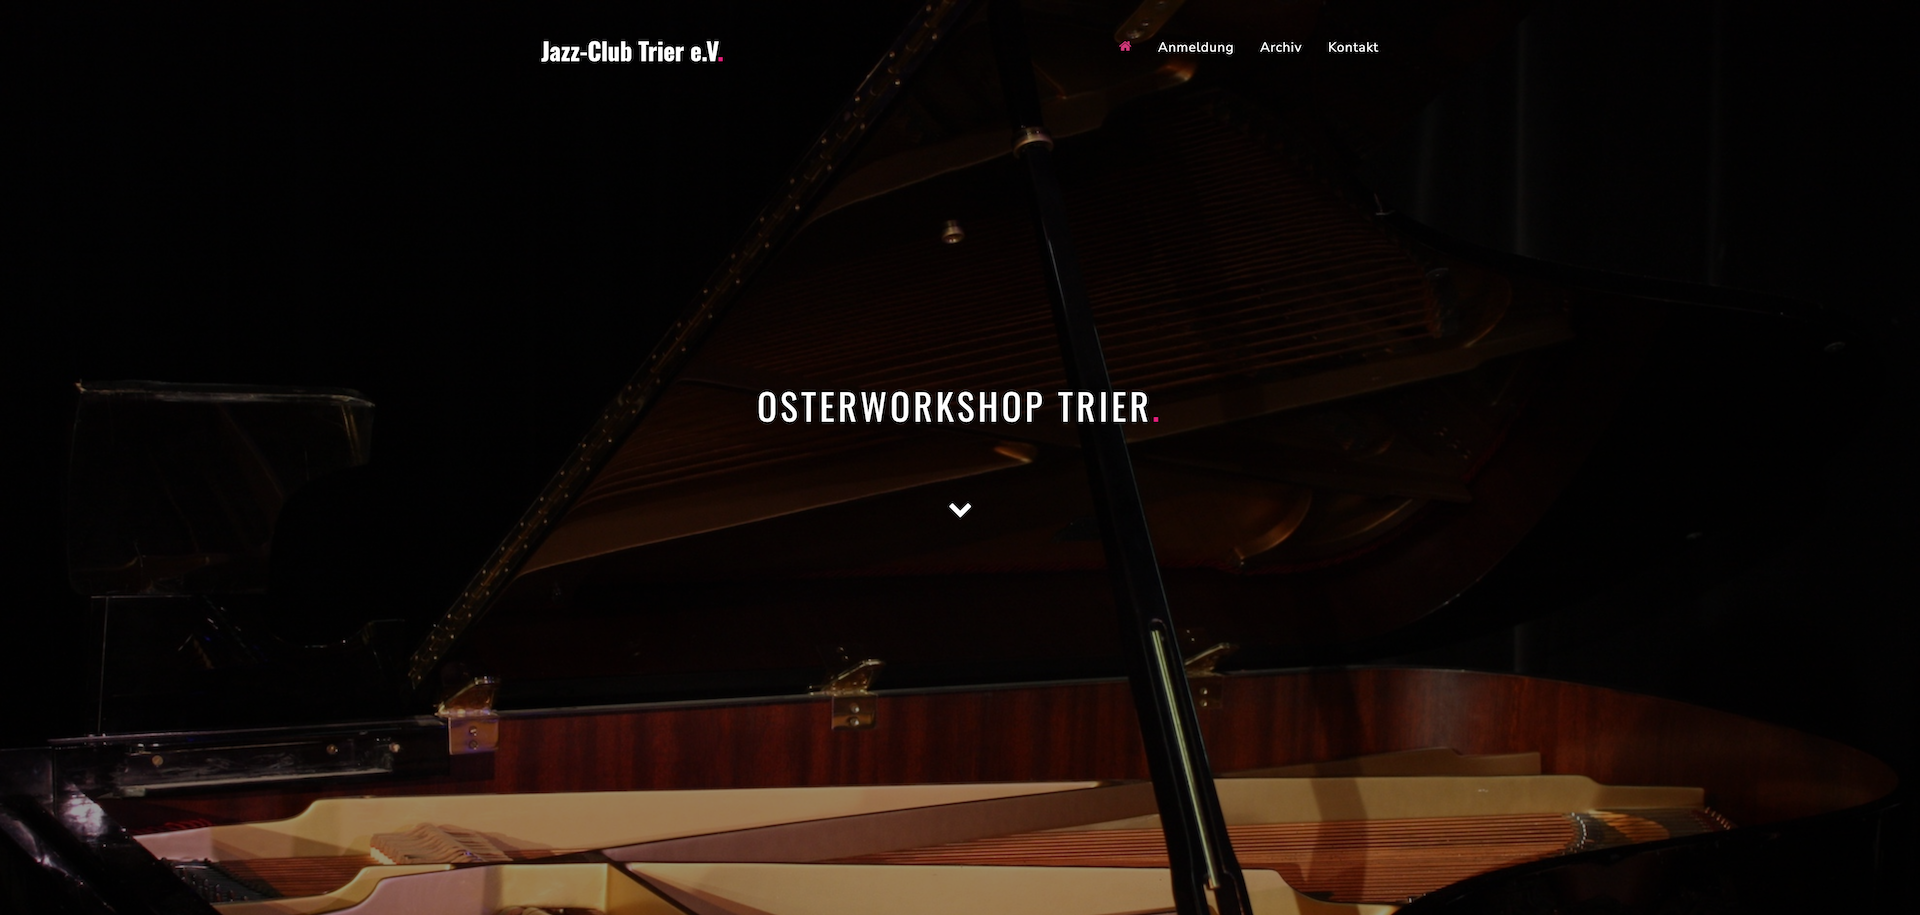 Jazz-Club Trier e.V. Osterworkshop